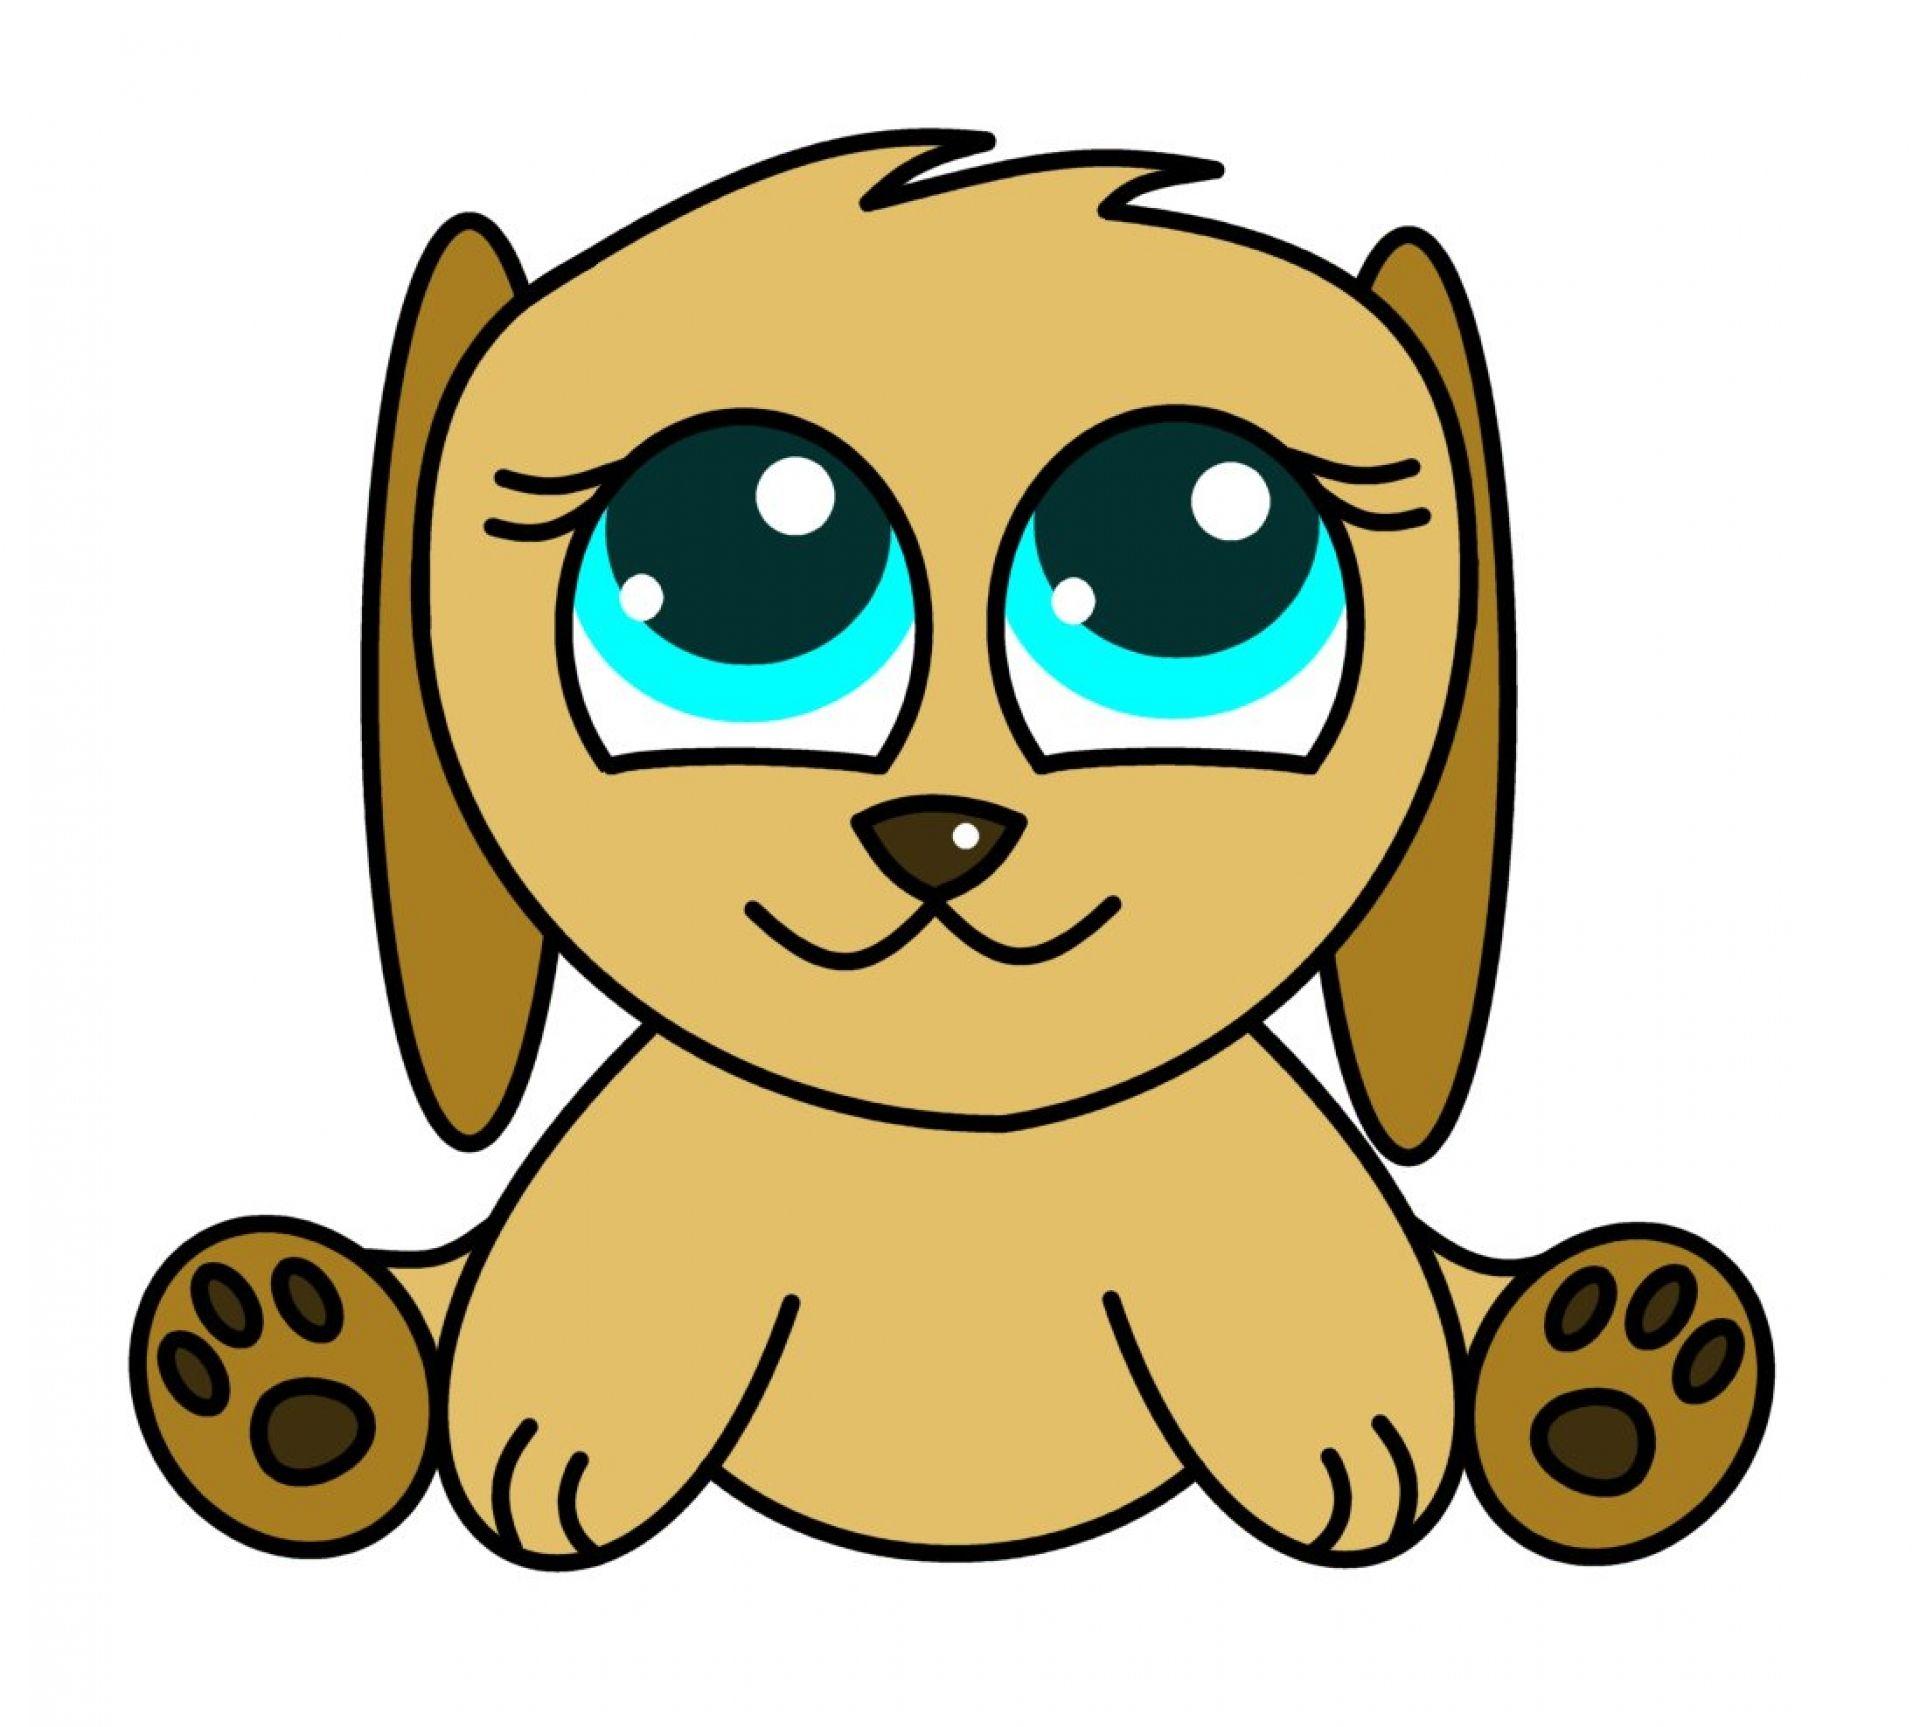 Free Cute Puppy Cartoon Image, Download Free Clip Art, Free Clip